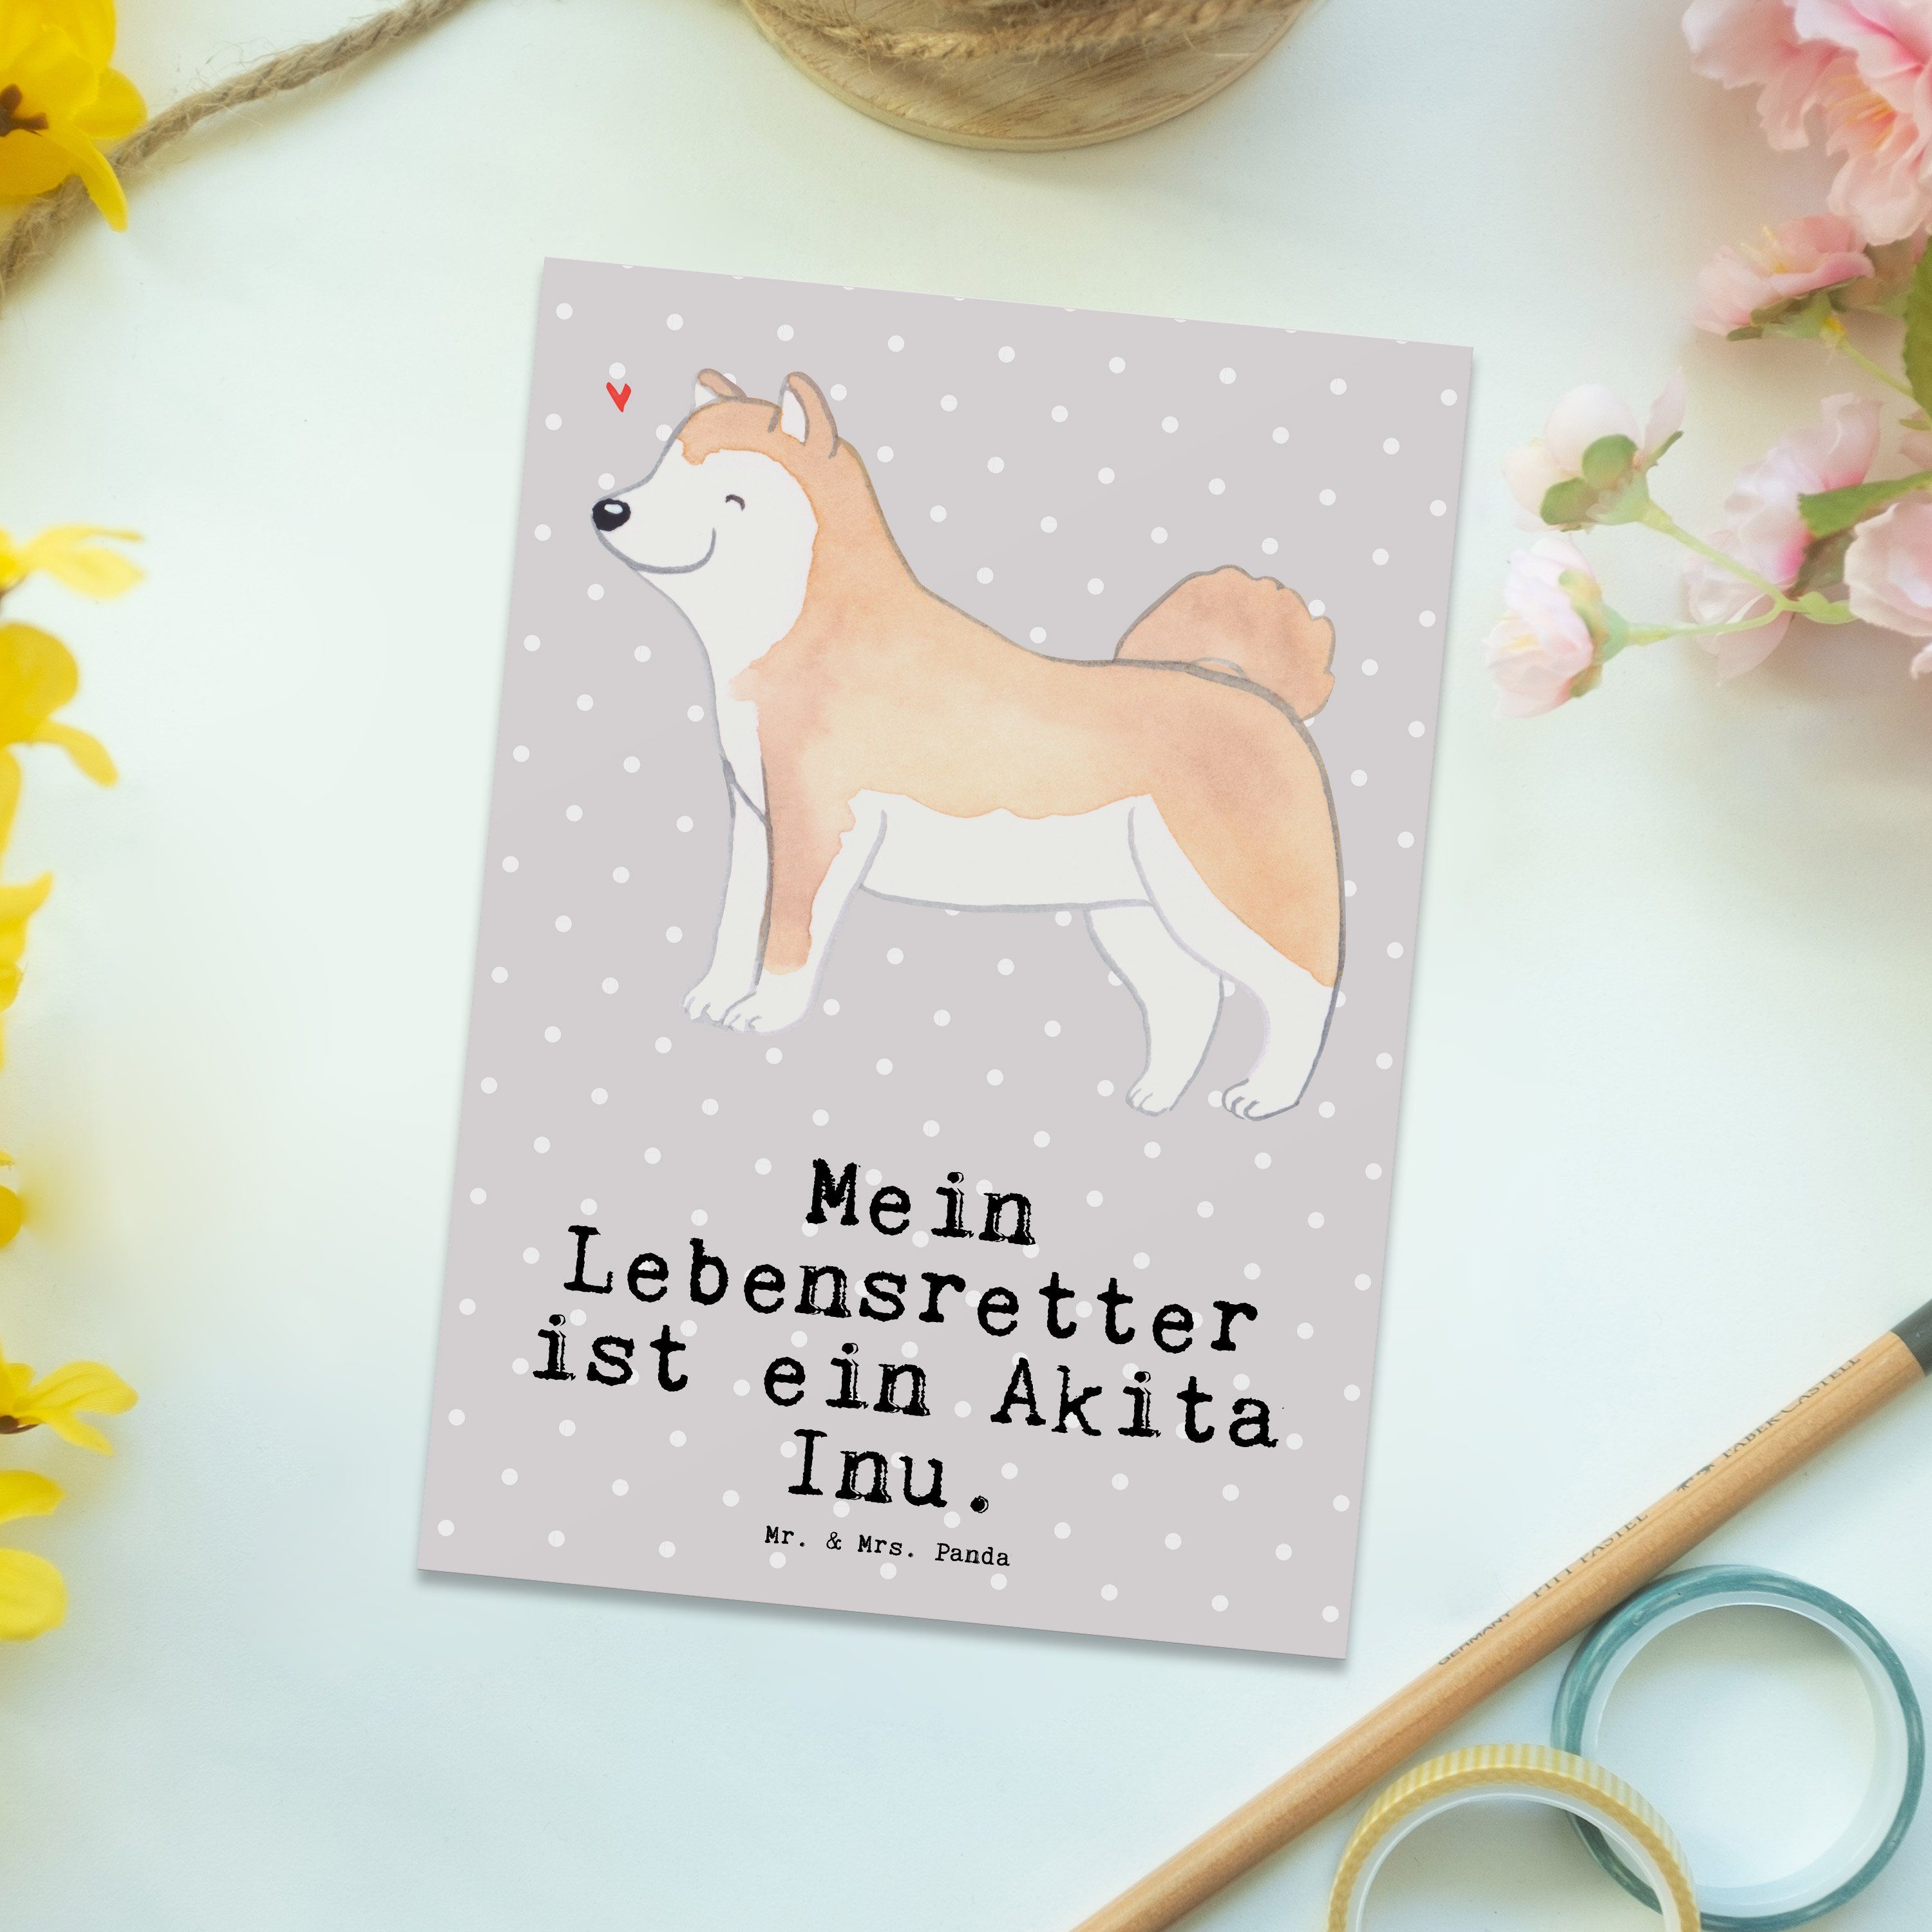 Panda Akita Mrs. Lebensretter - Inu Geschenk, Ansi Mr. Geschenkkarte, & Grau Pastell Postkarte -